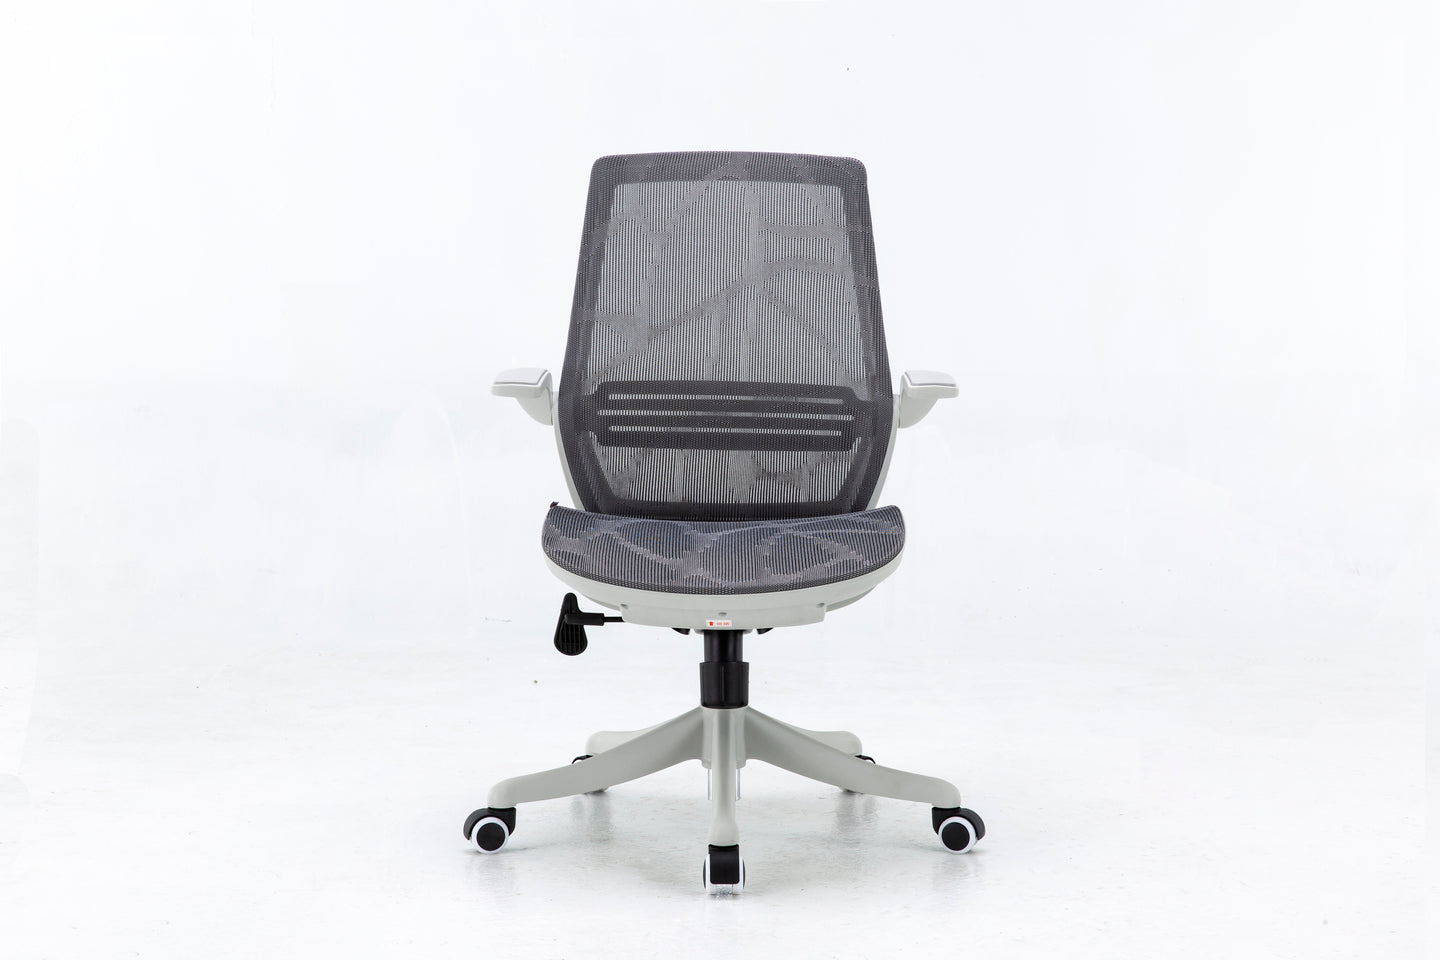 SIHOO M59 Ergonomics Office Chair